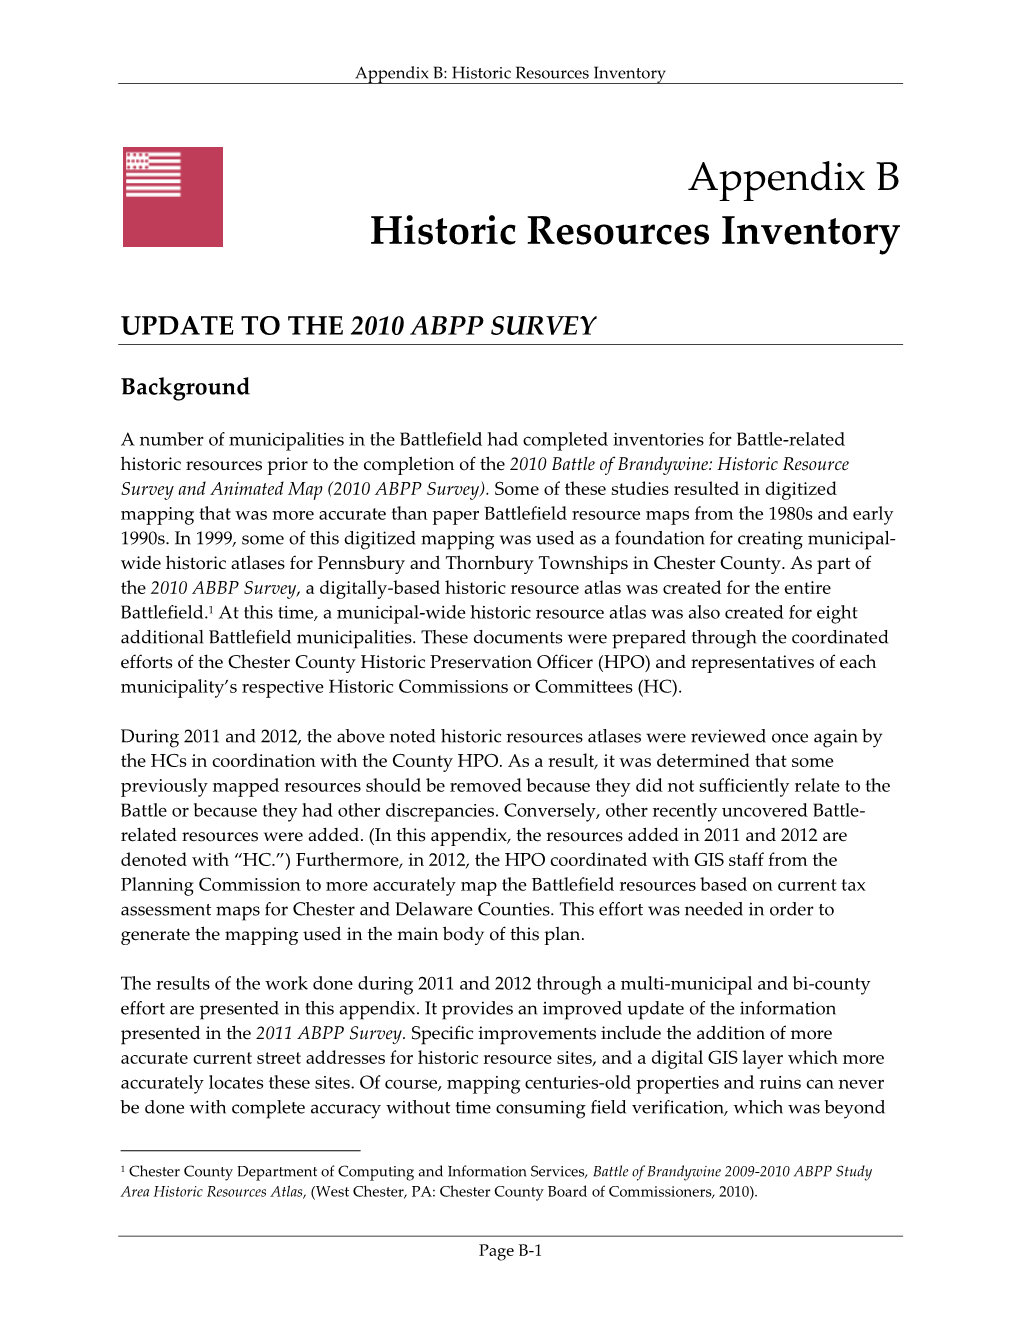 Appendix B Historic Resources Inventory